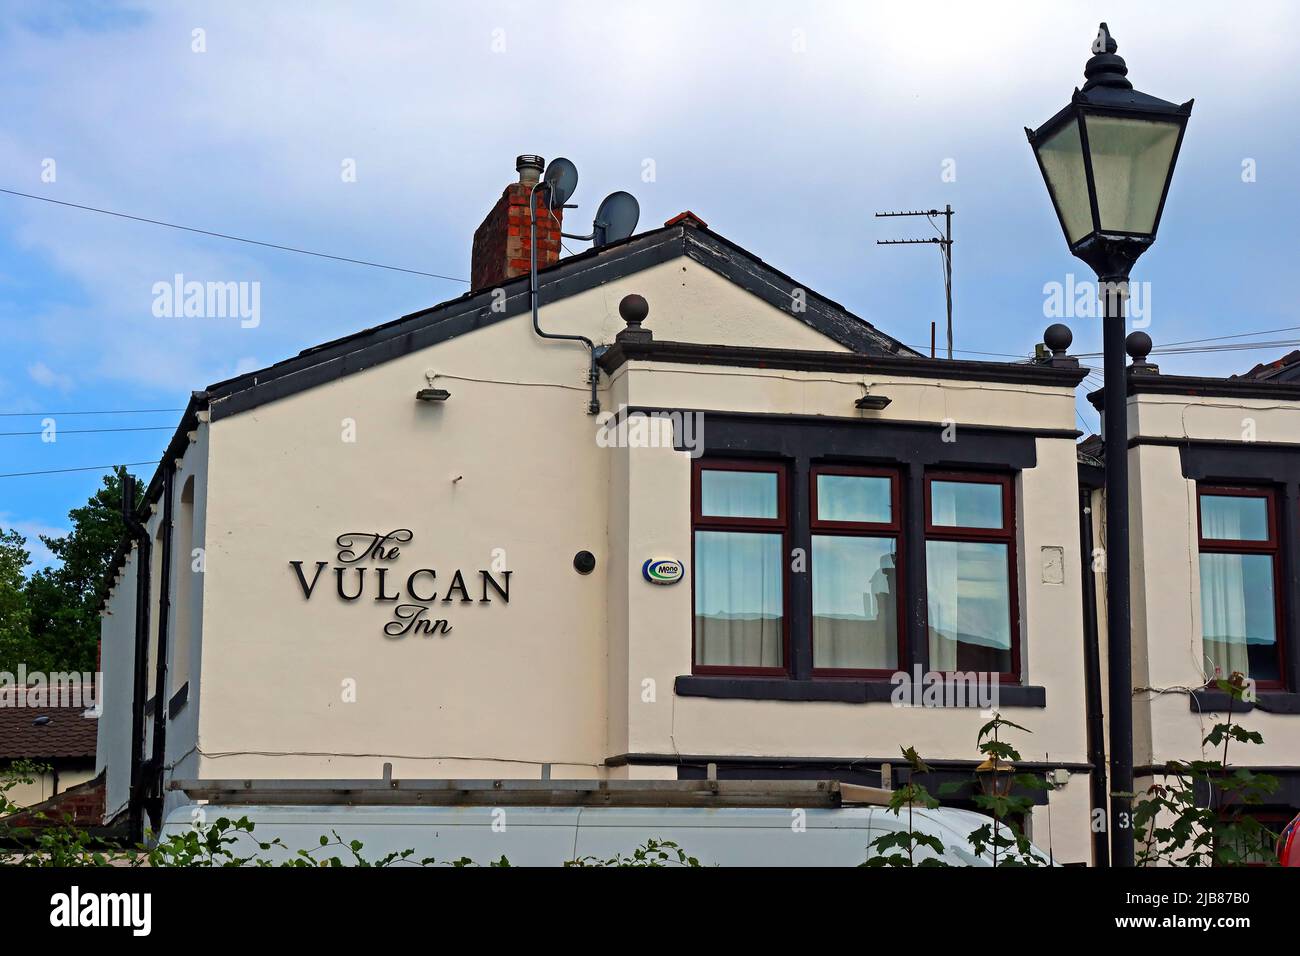 The Vulcan Inn pub, Vulcan Village, Warrington, ex-Charles Tayleur railway factory Newton-Le-Willows history, Lancashire Stock Photo